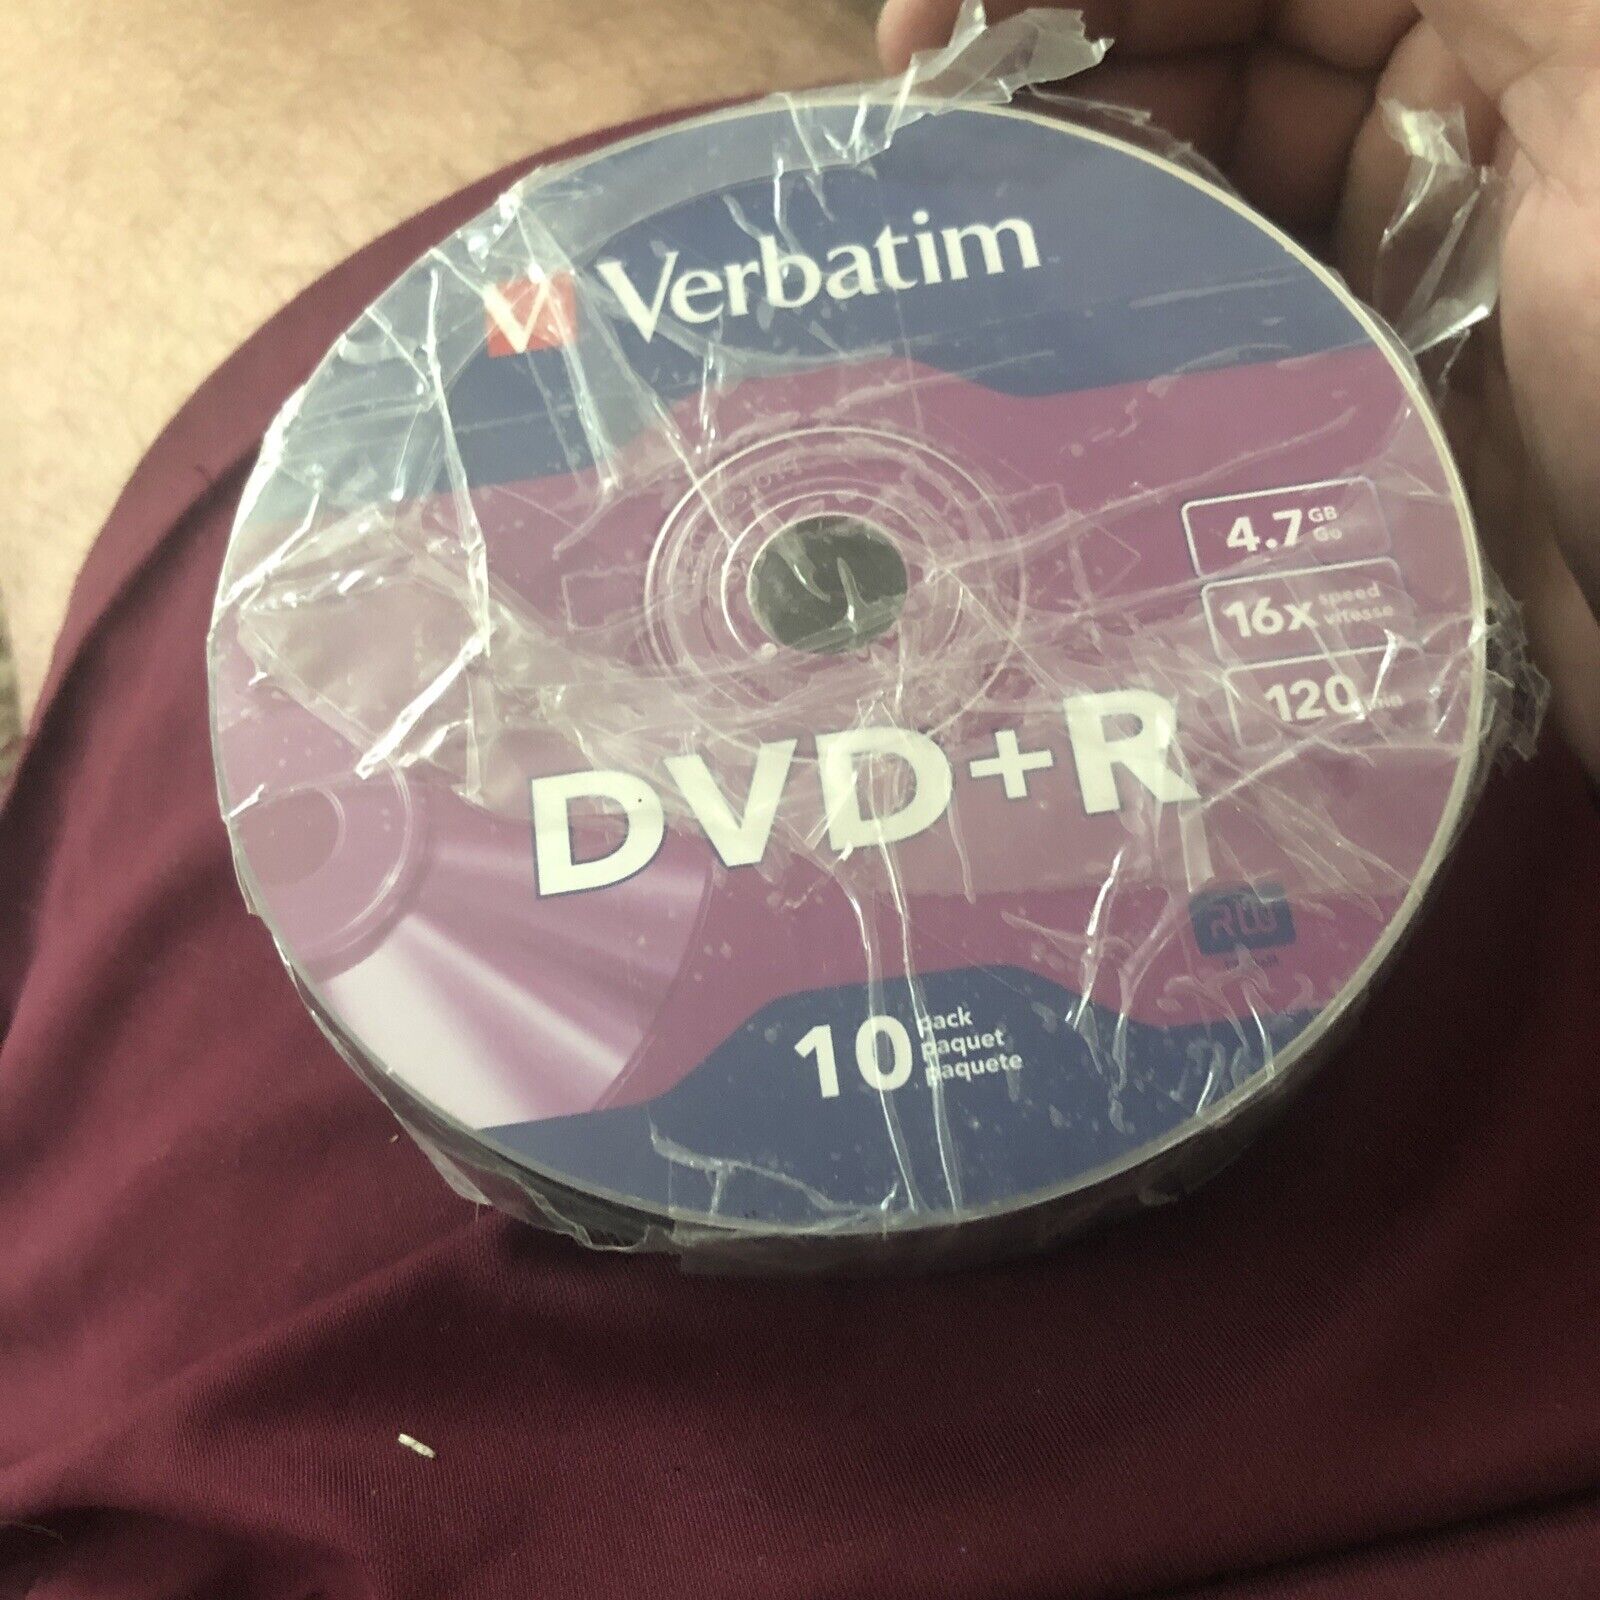 Verbatim Dvd+r 20 Pack 16x 4.7gb 120 Minutes Recordable New Sealed